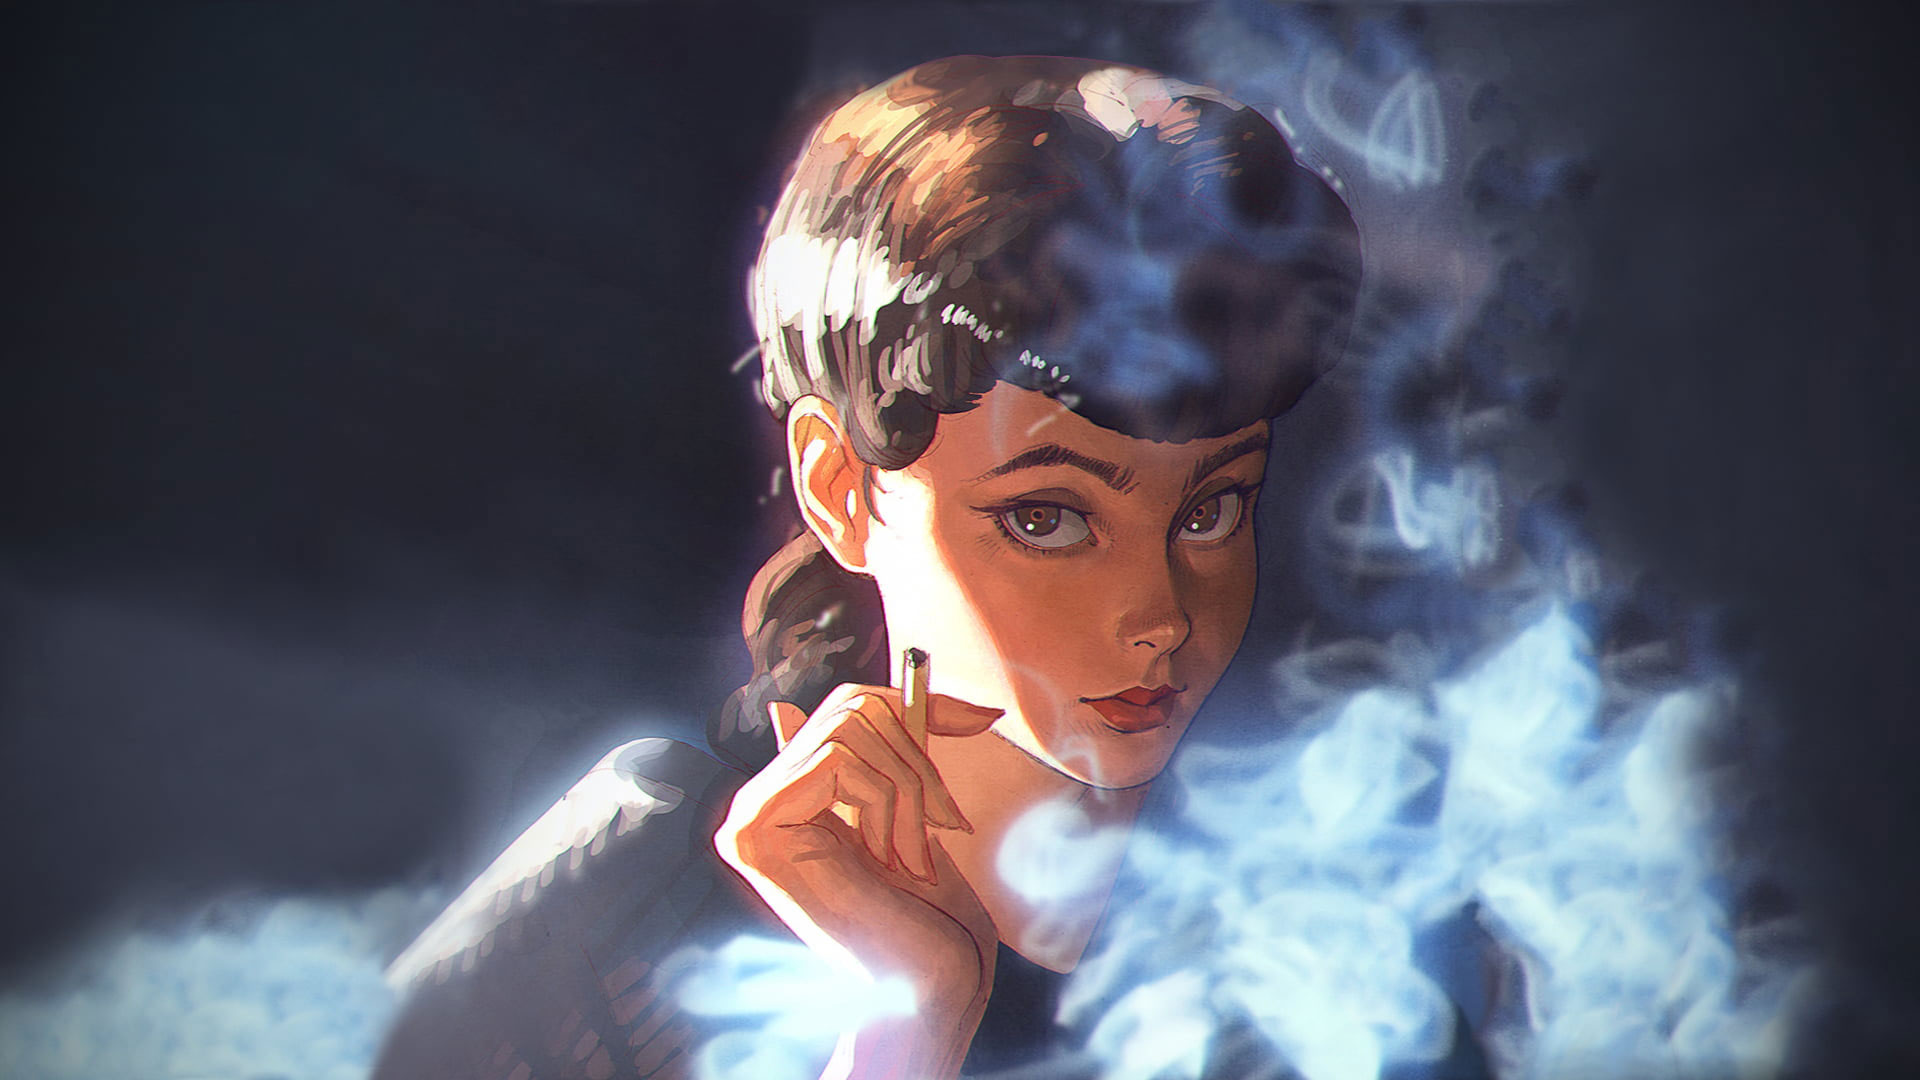 Wallpaper Woman Smoking Cigarette Illustration, Blade Runner